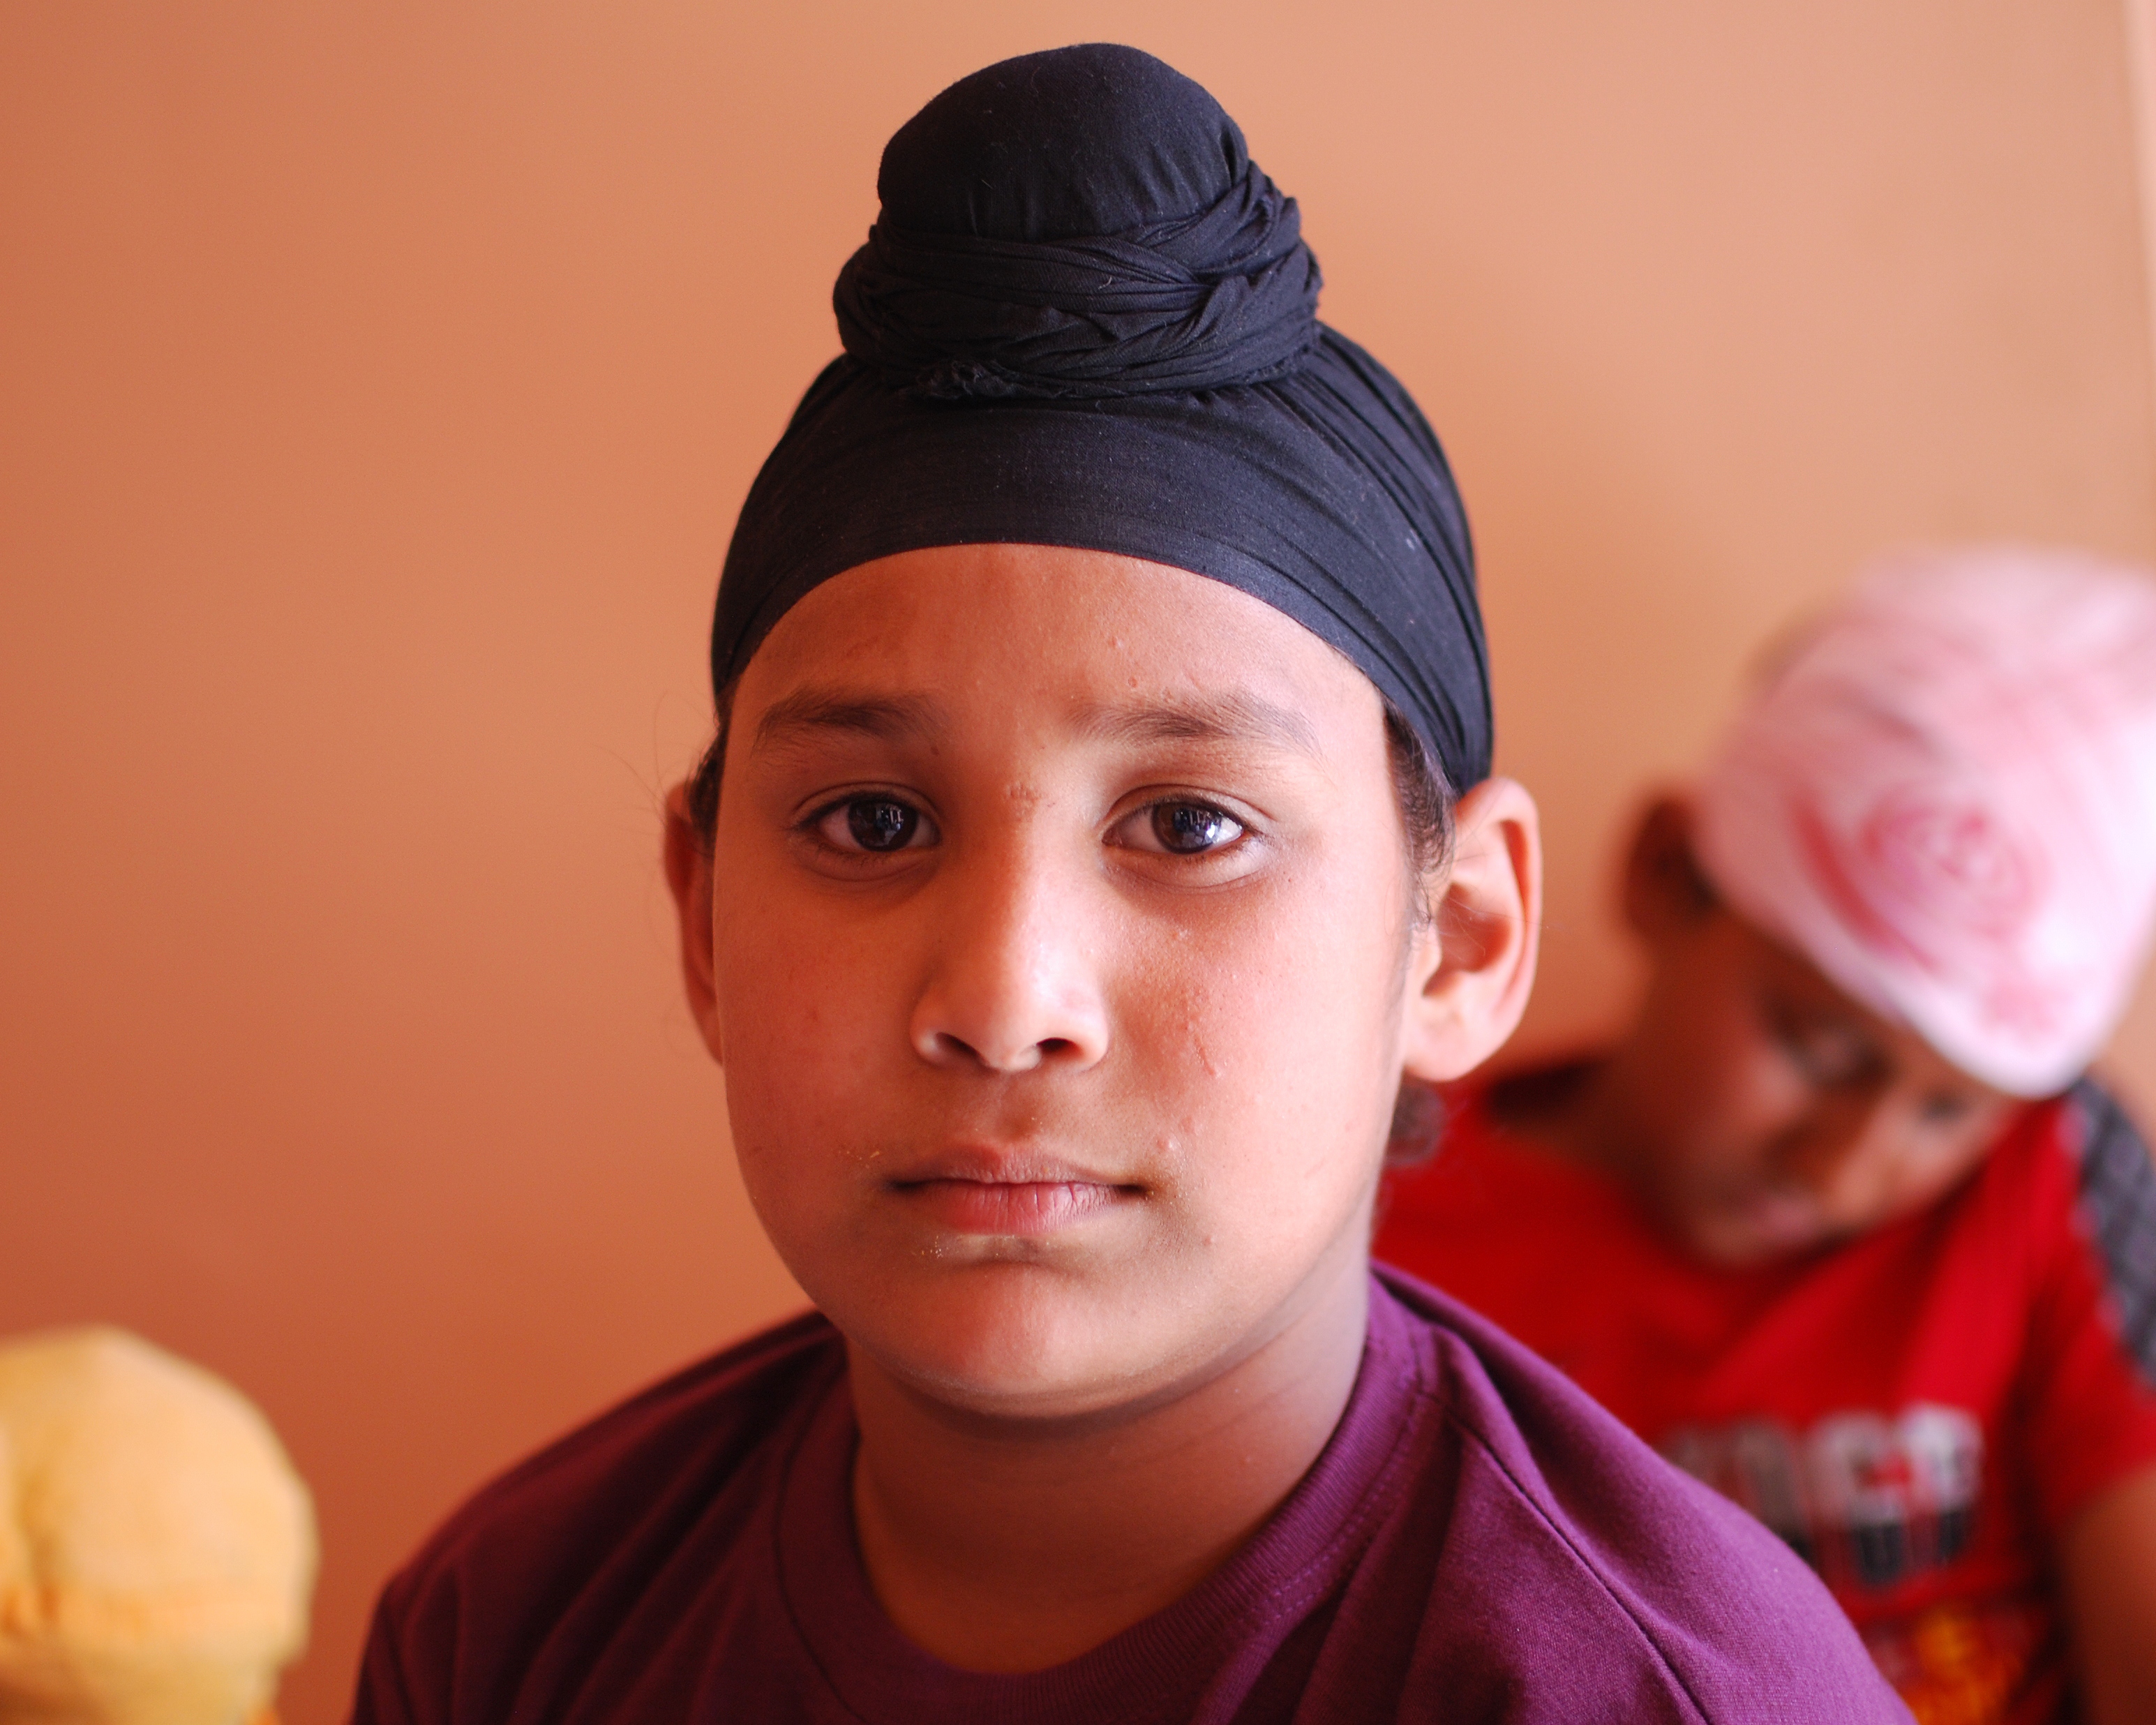 File:Sikh Boy wearing Patka.jpg - Wikimedia Commons